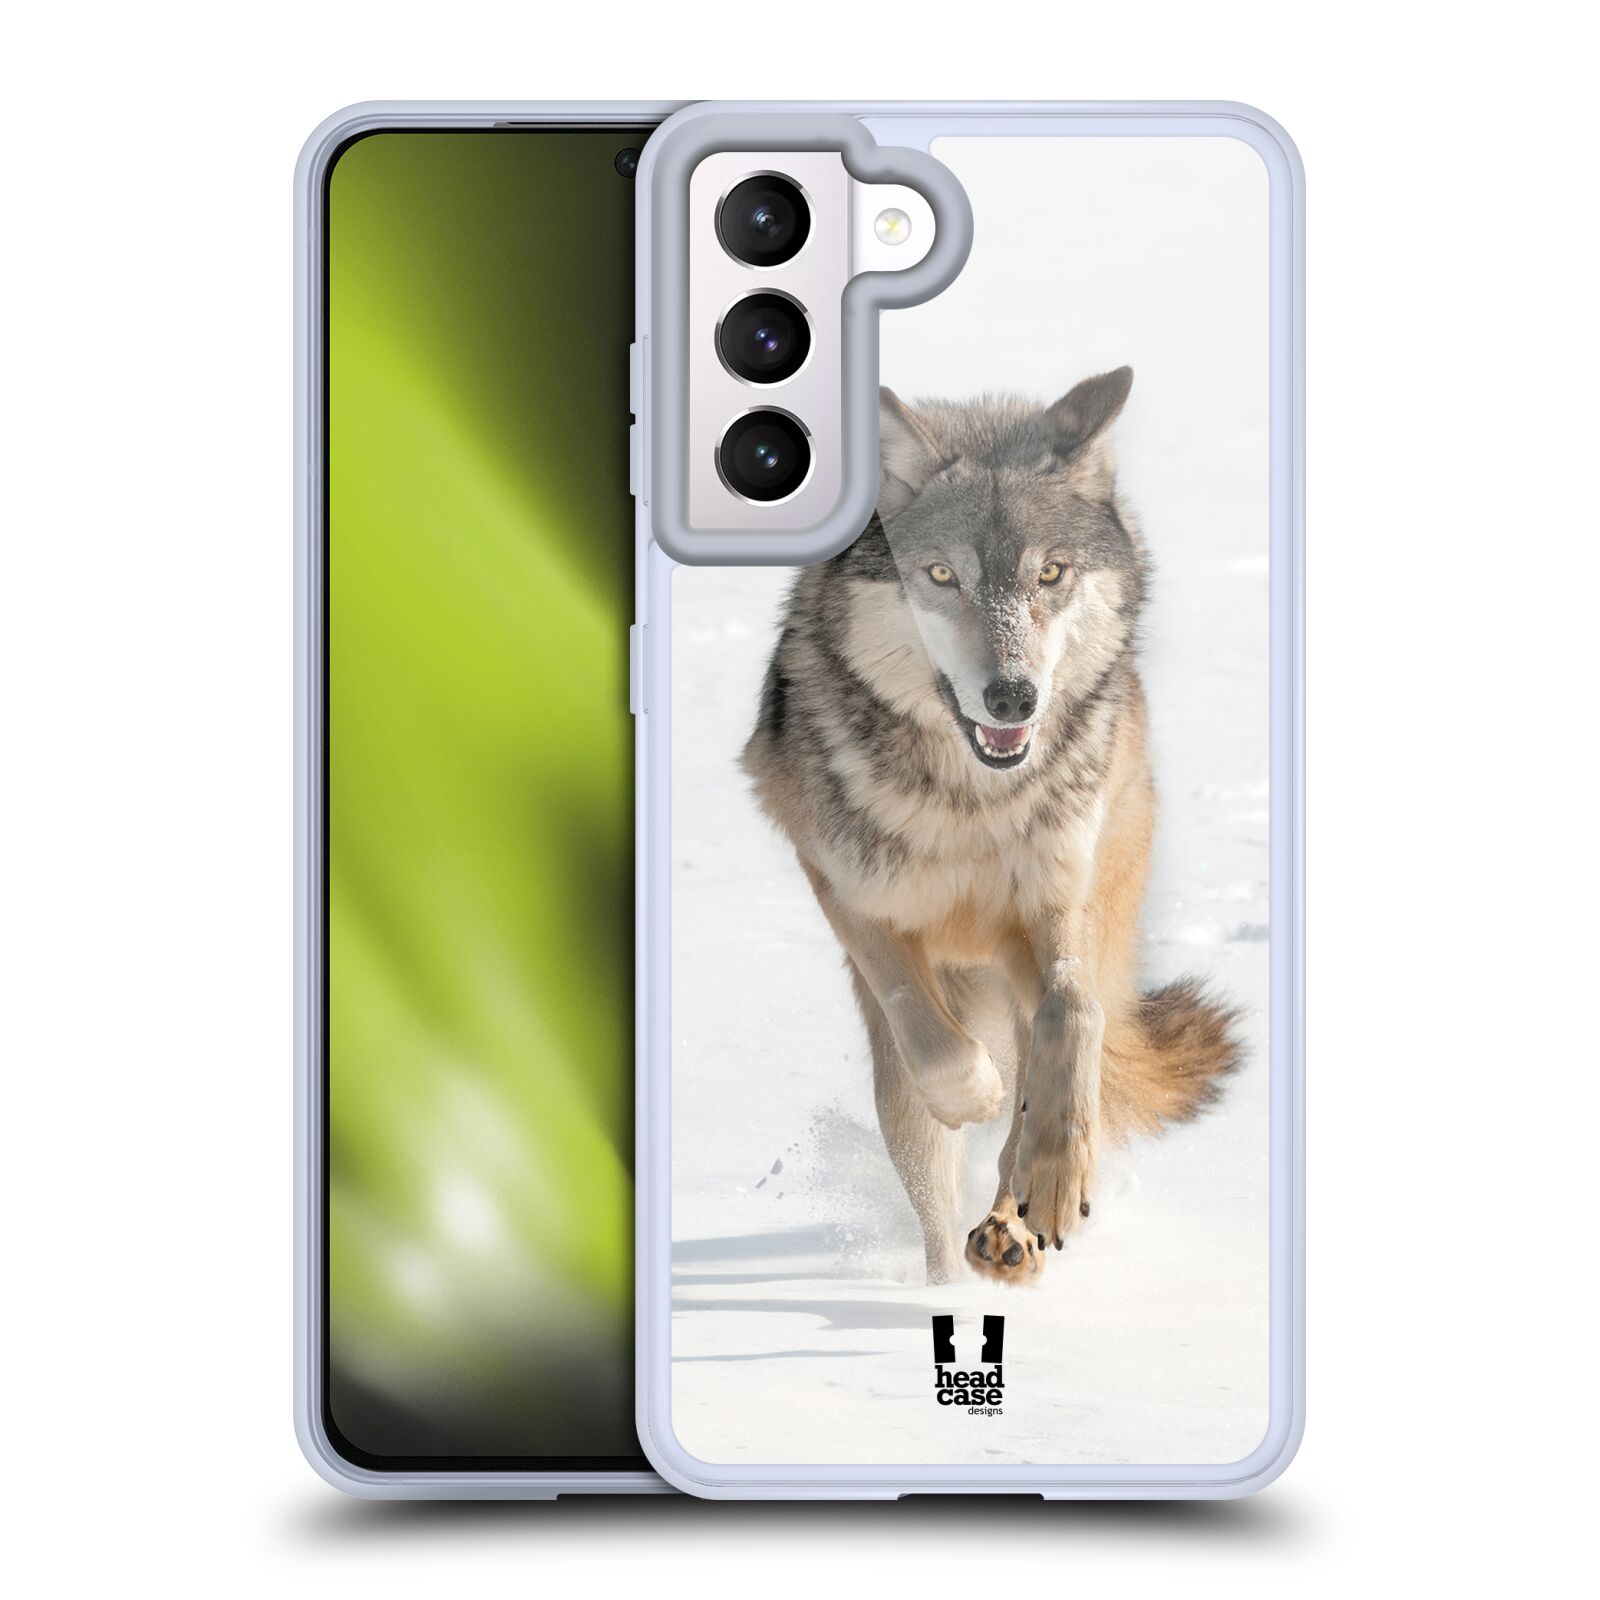 Plastový obal HEAD CASE na mobil Samsung Galaxy S21 5G vzor Divočina, Divoký život a zvířata foto BĚŽÍCÍ VLK